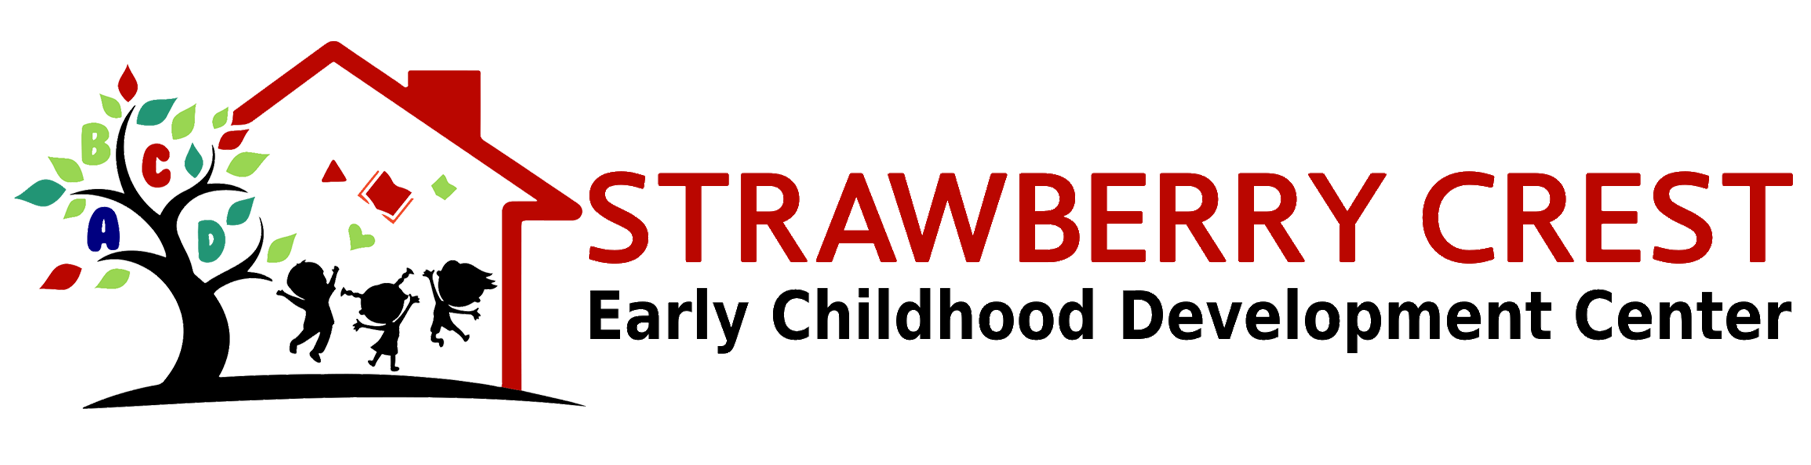 Strawberry Crest Early Childhood Development Center